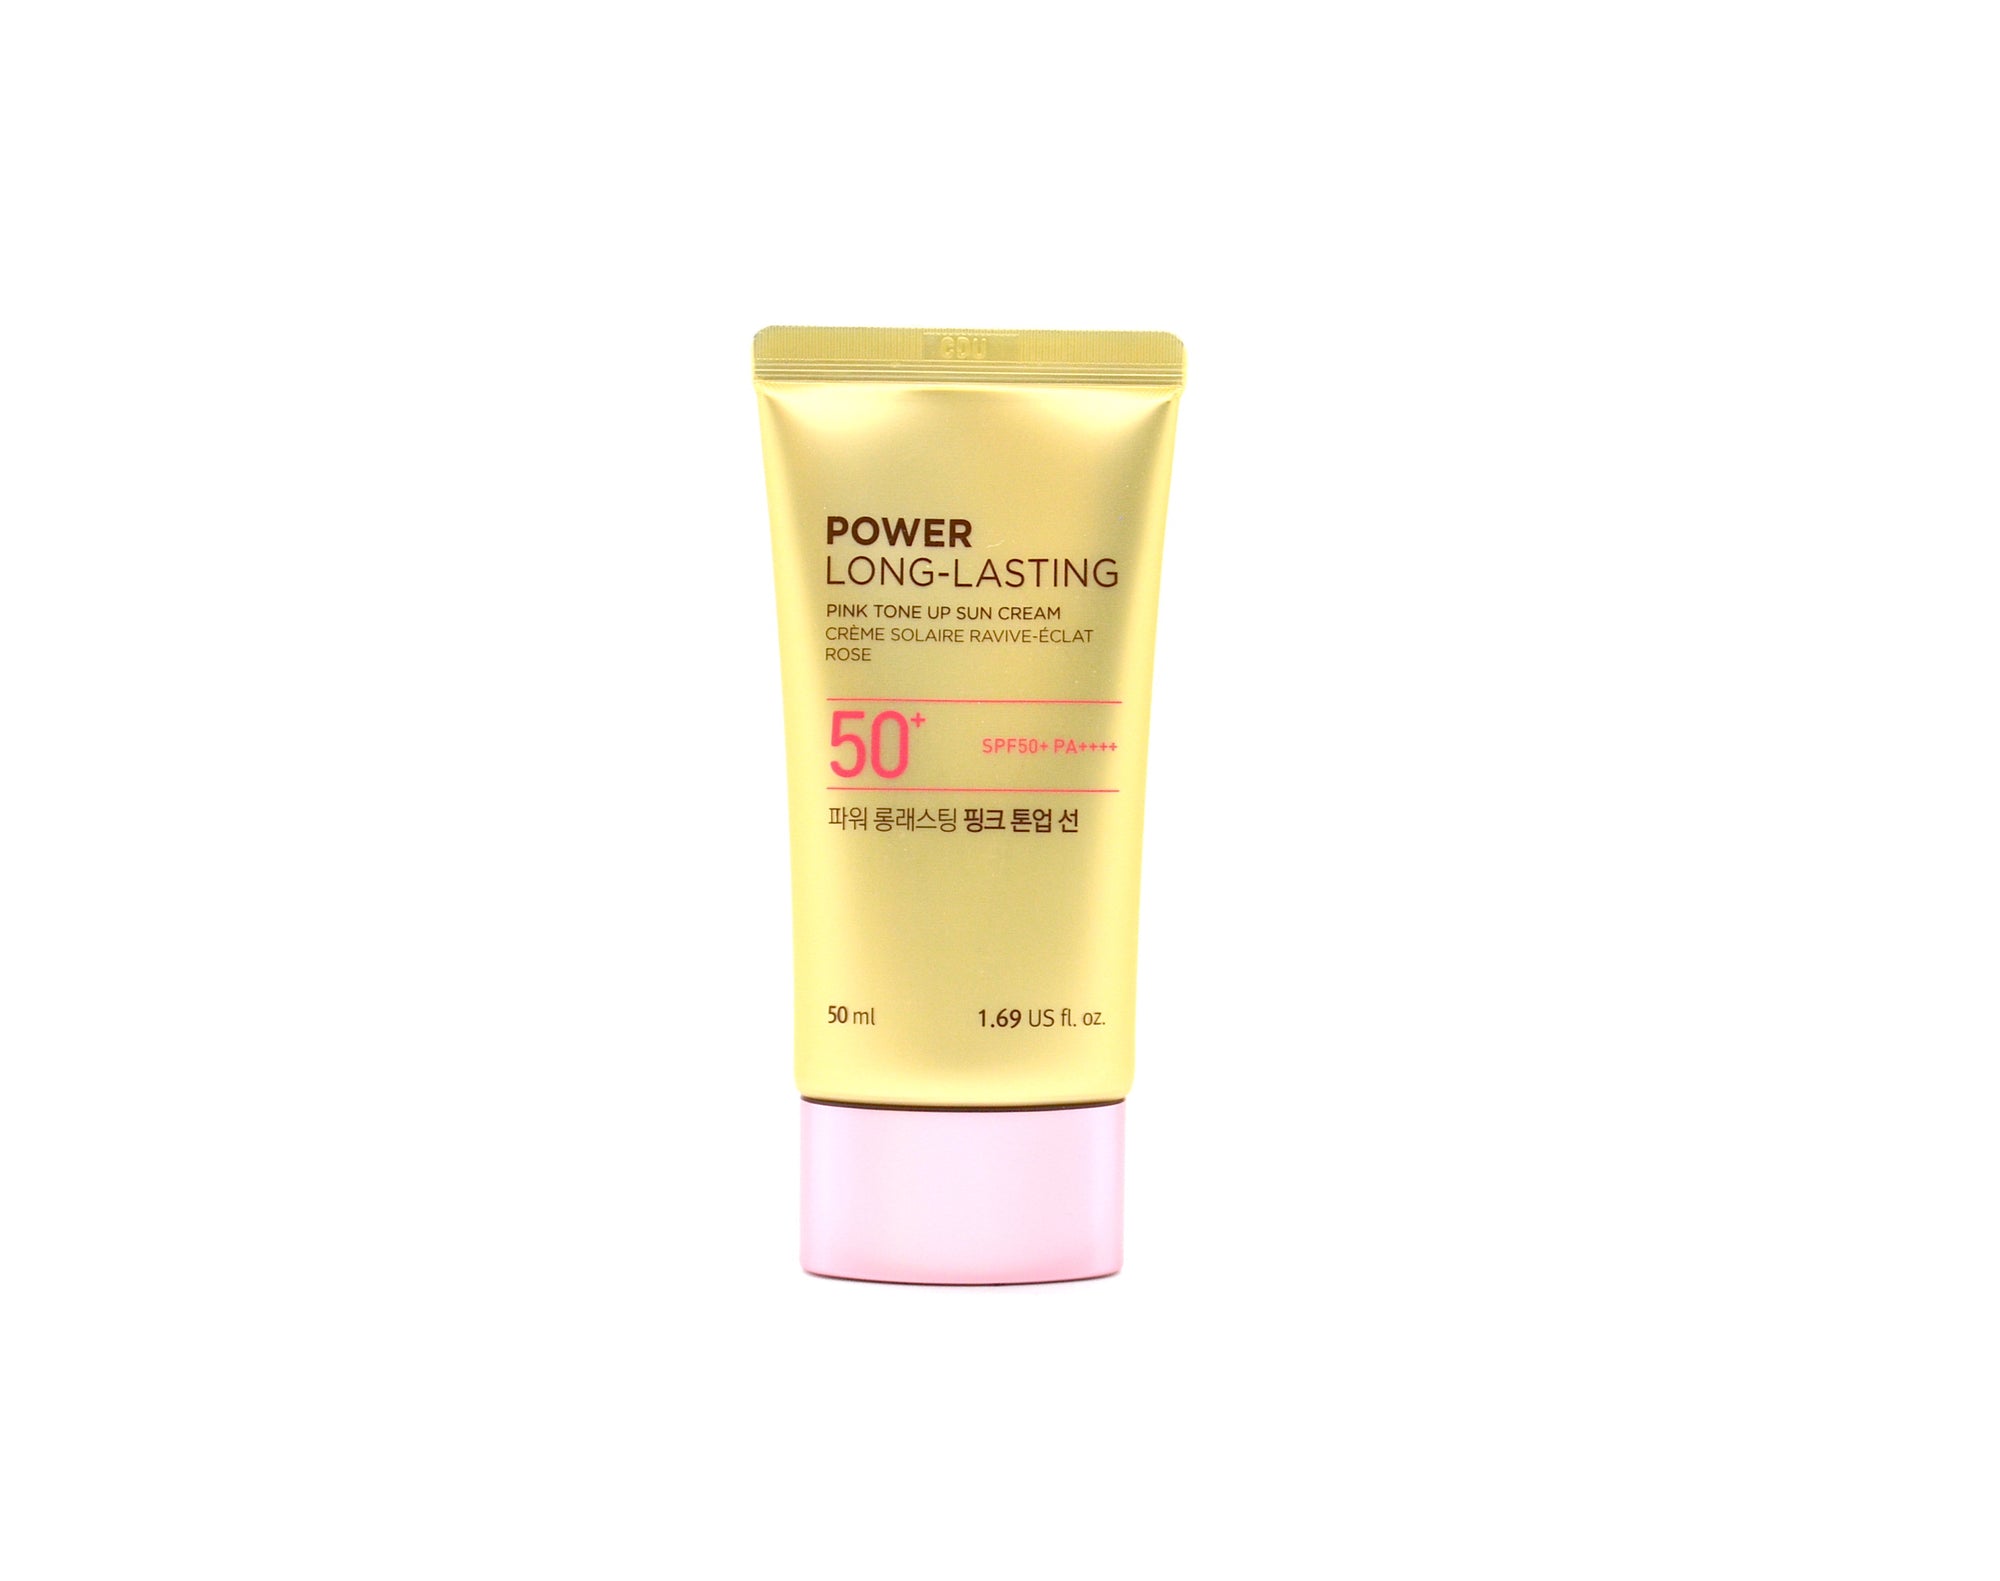 Power Long-Lasting Pink Tone Up Sun Cream